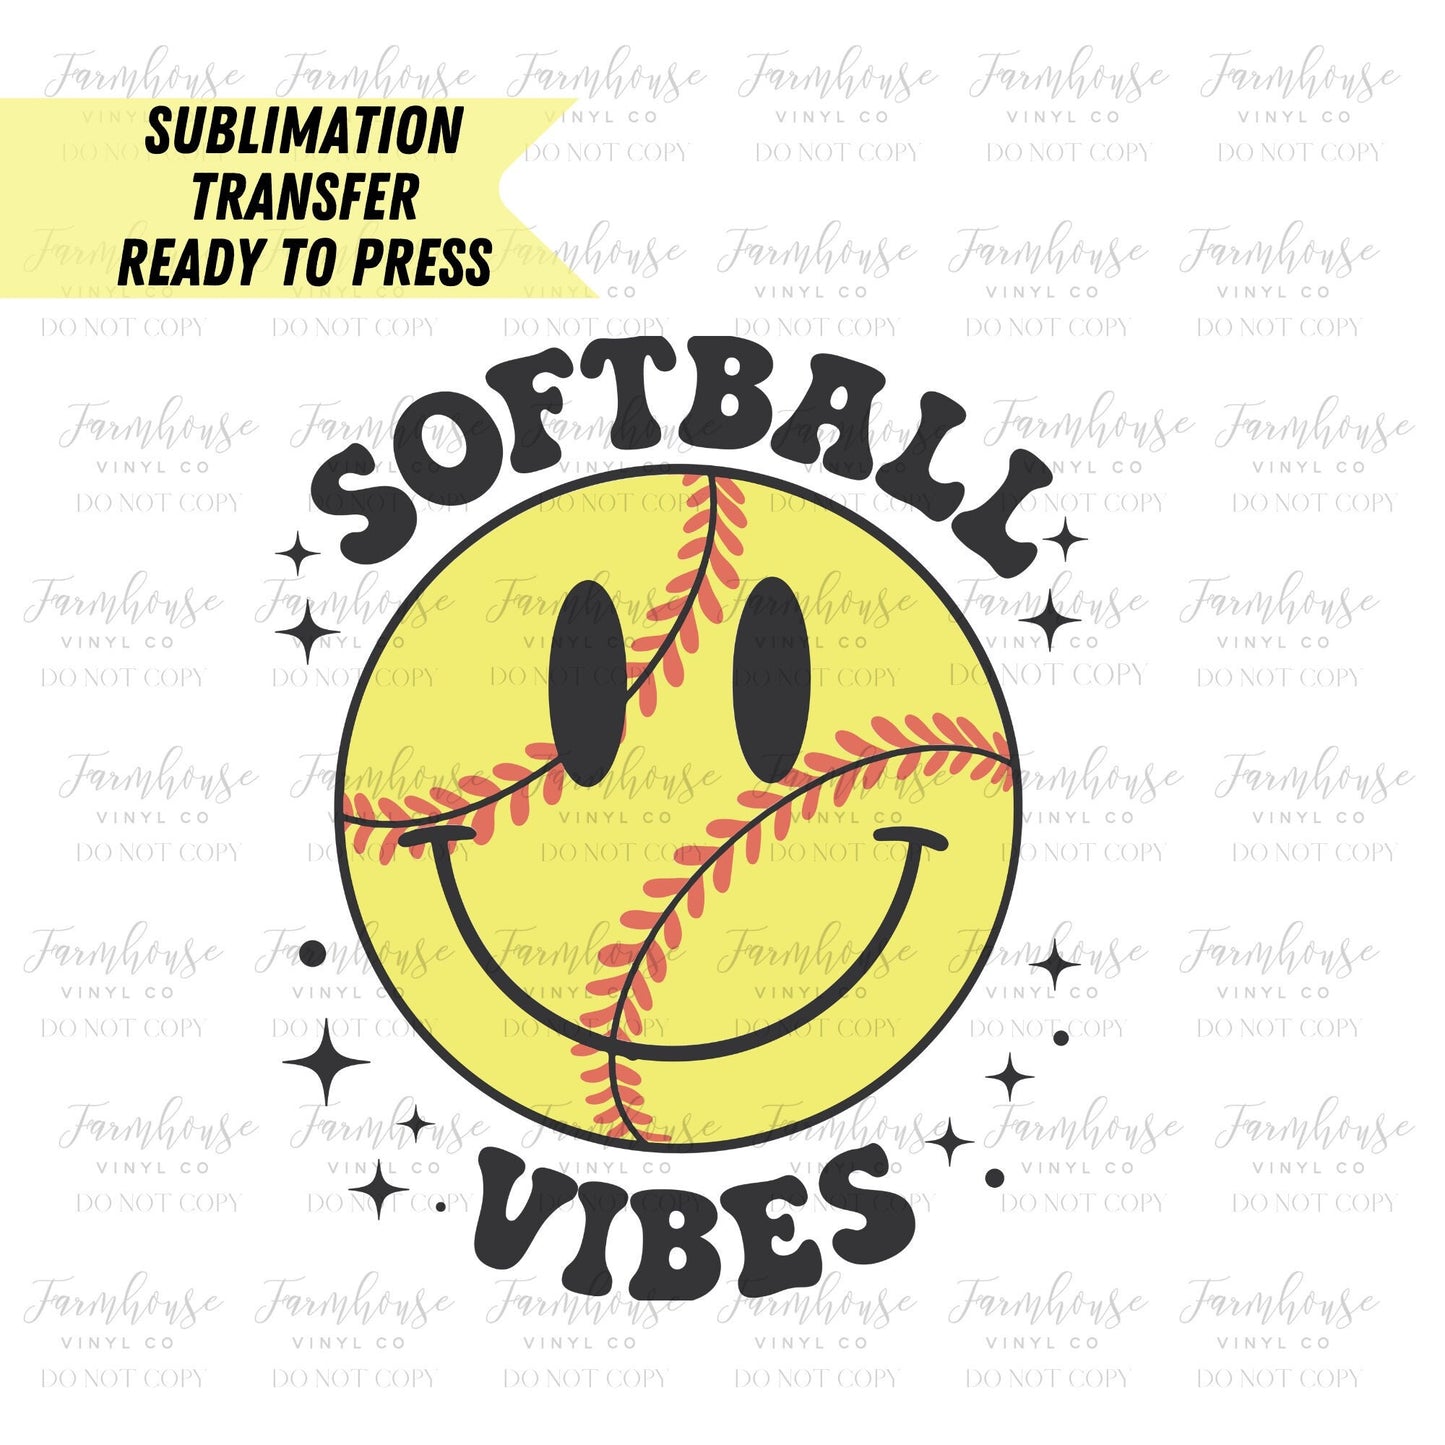 Softball Vibes, Retro Smiley Face, Sublimation Transfer Prints, Ready to Press, Heat Transfer Design, Softball Team Mom Design, Softball - Farmhouse Vinyl Co